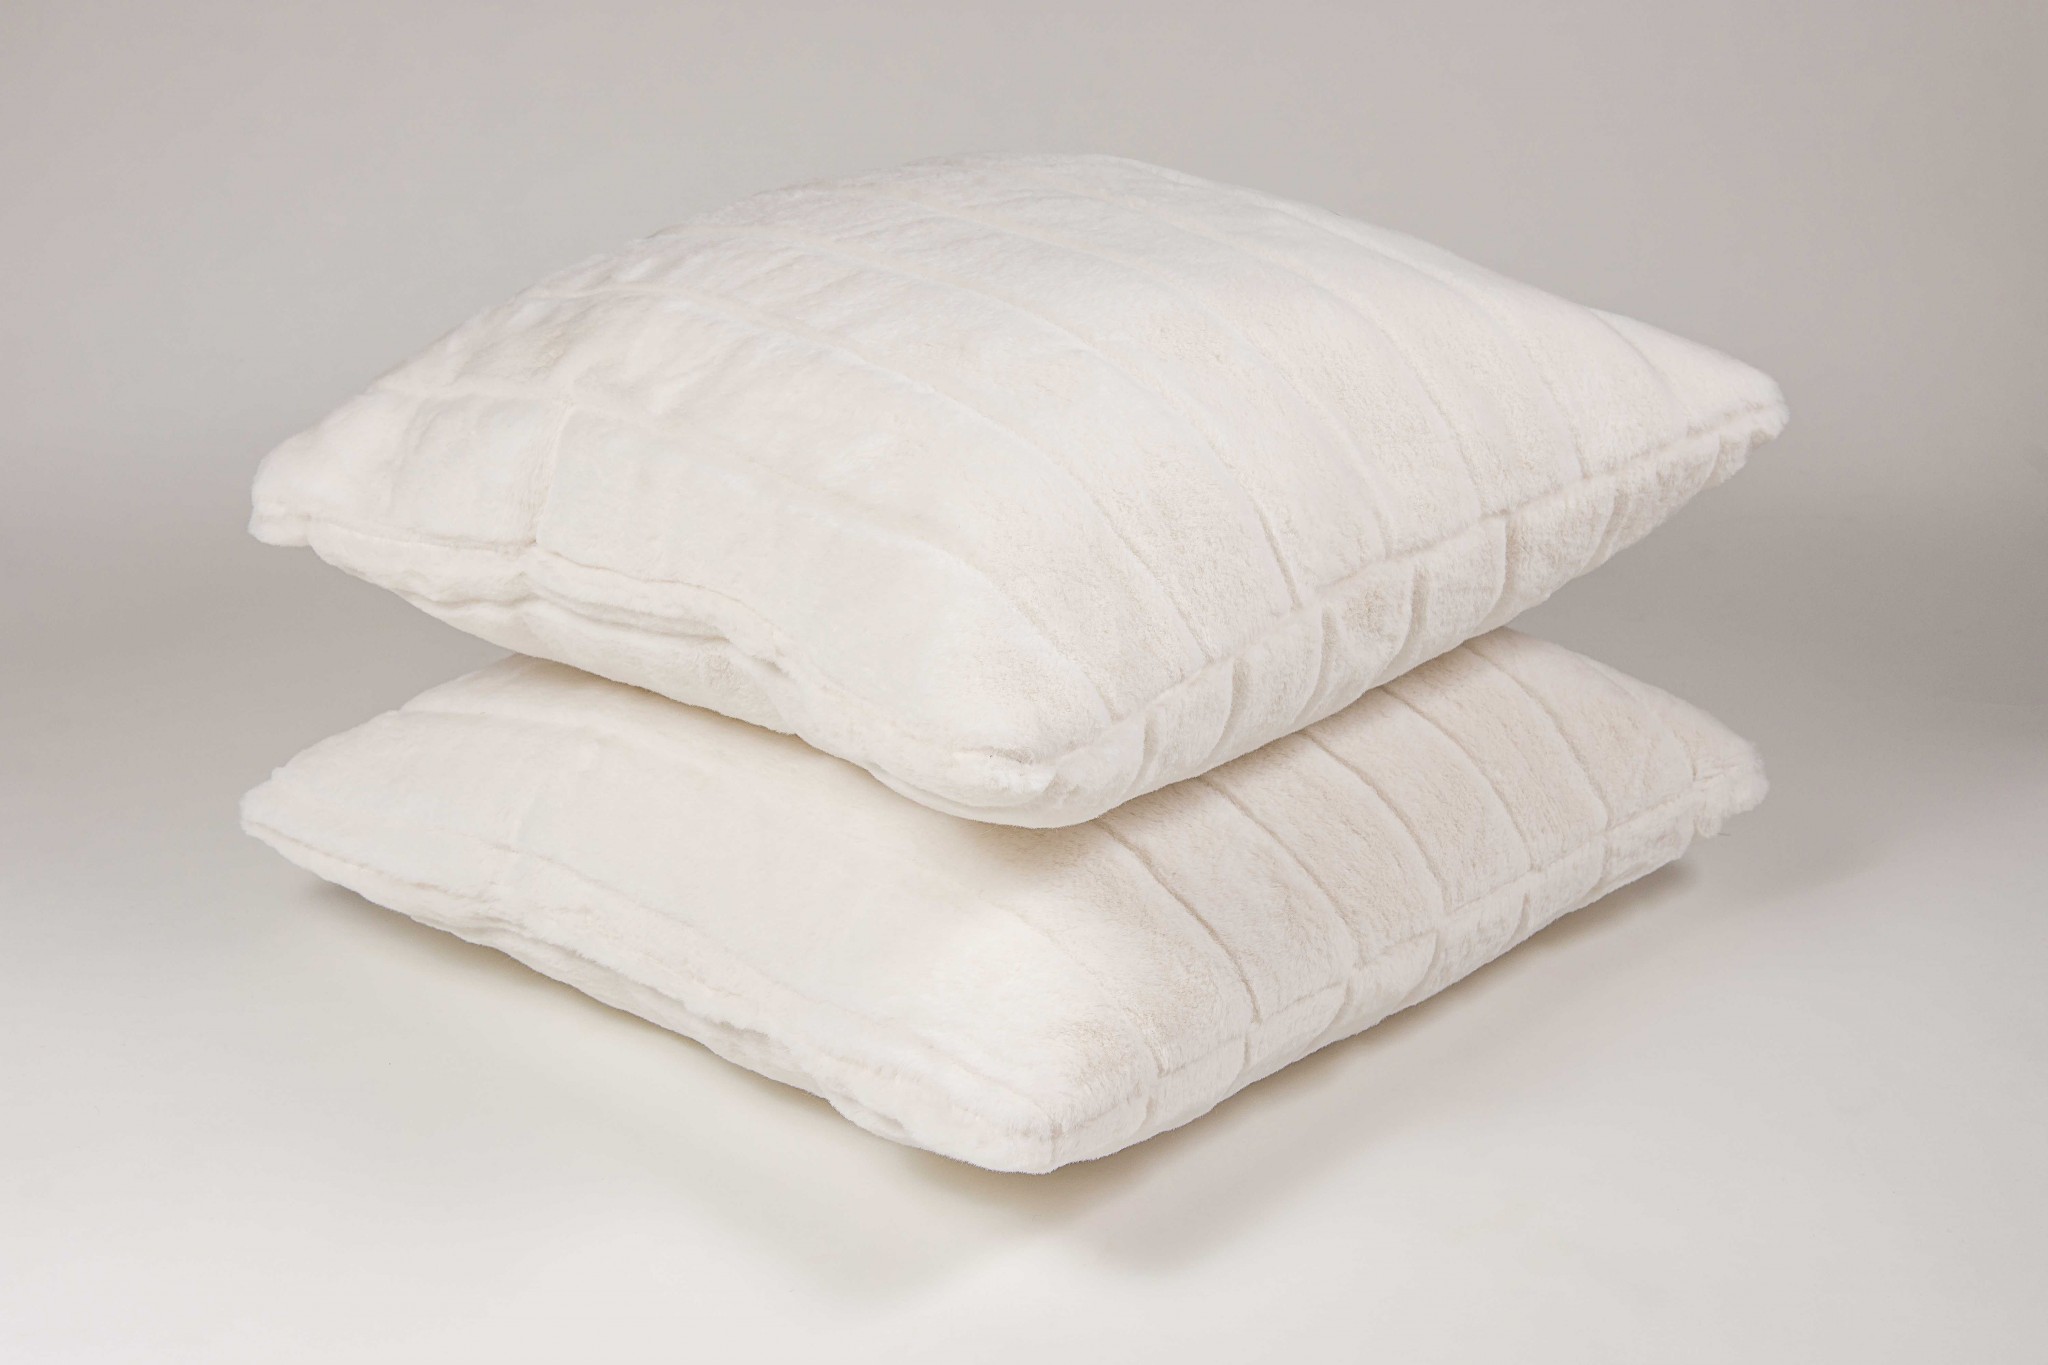 18" x 18" x 5" Off-White, Faux Fur - Pillow 2-Pack